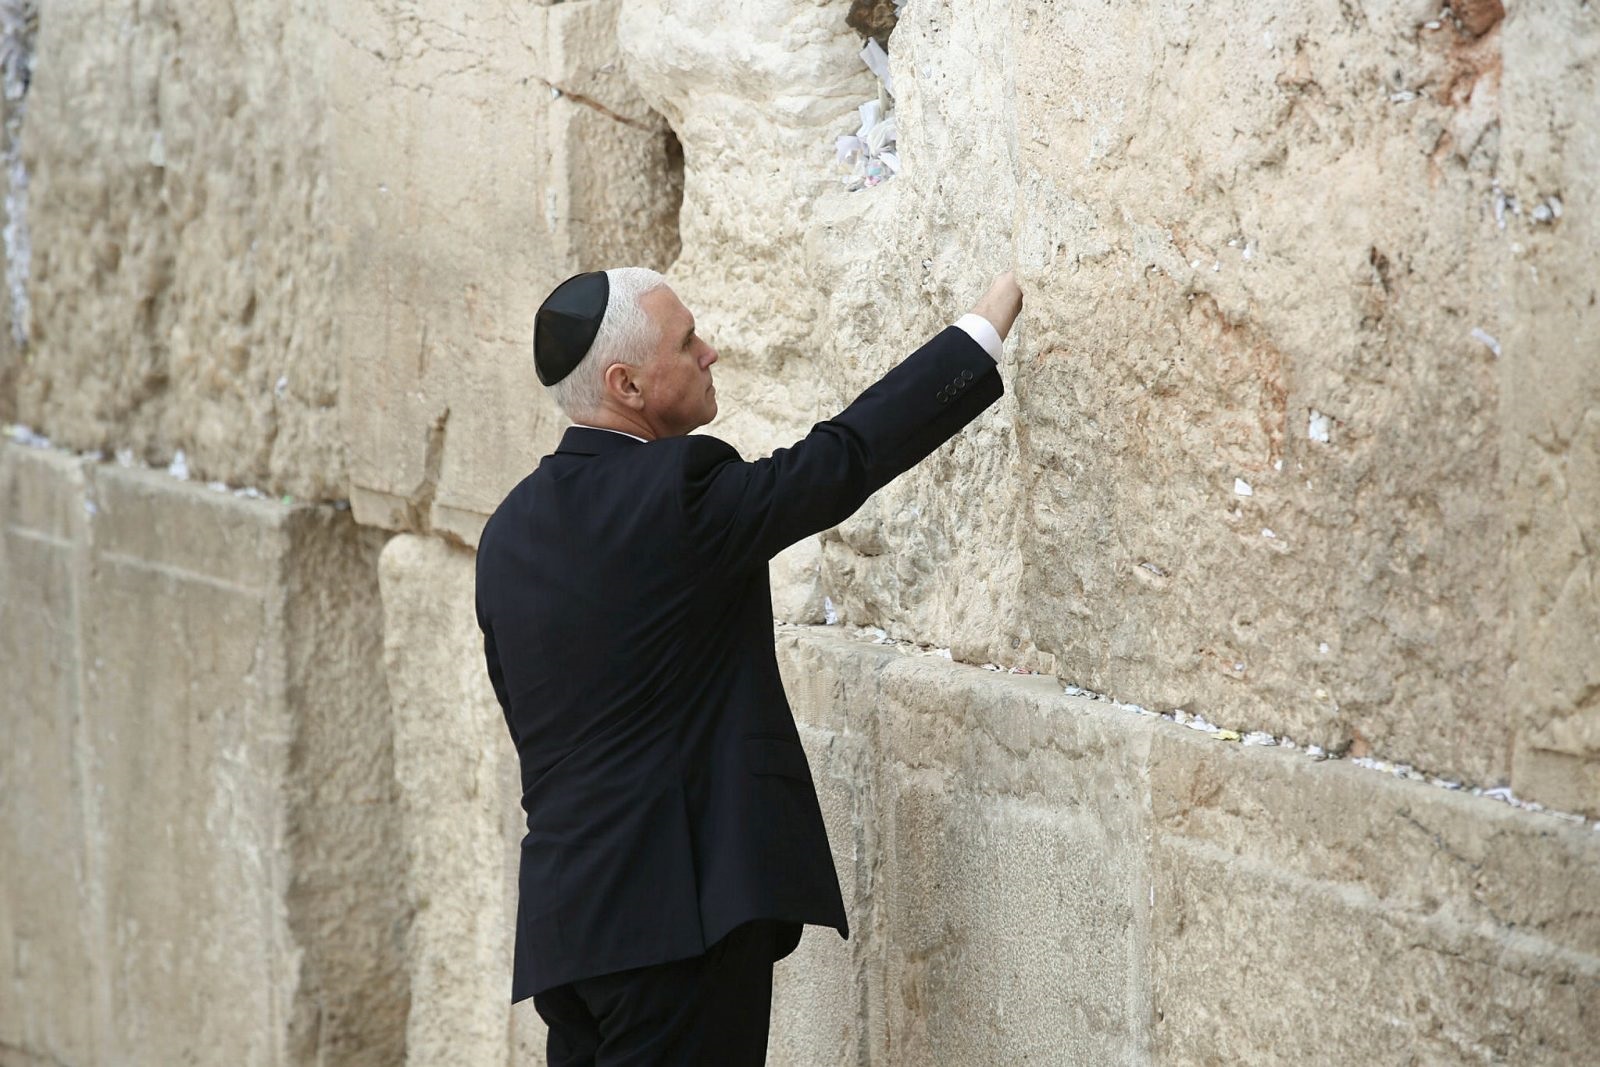 US Vice President Pence wraps up Jerusalem trip with “inspiring” prayer ...